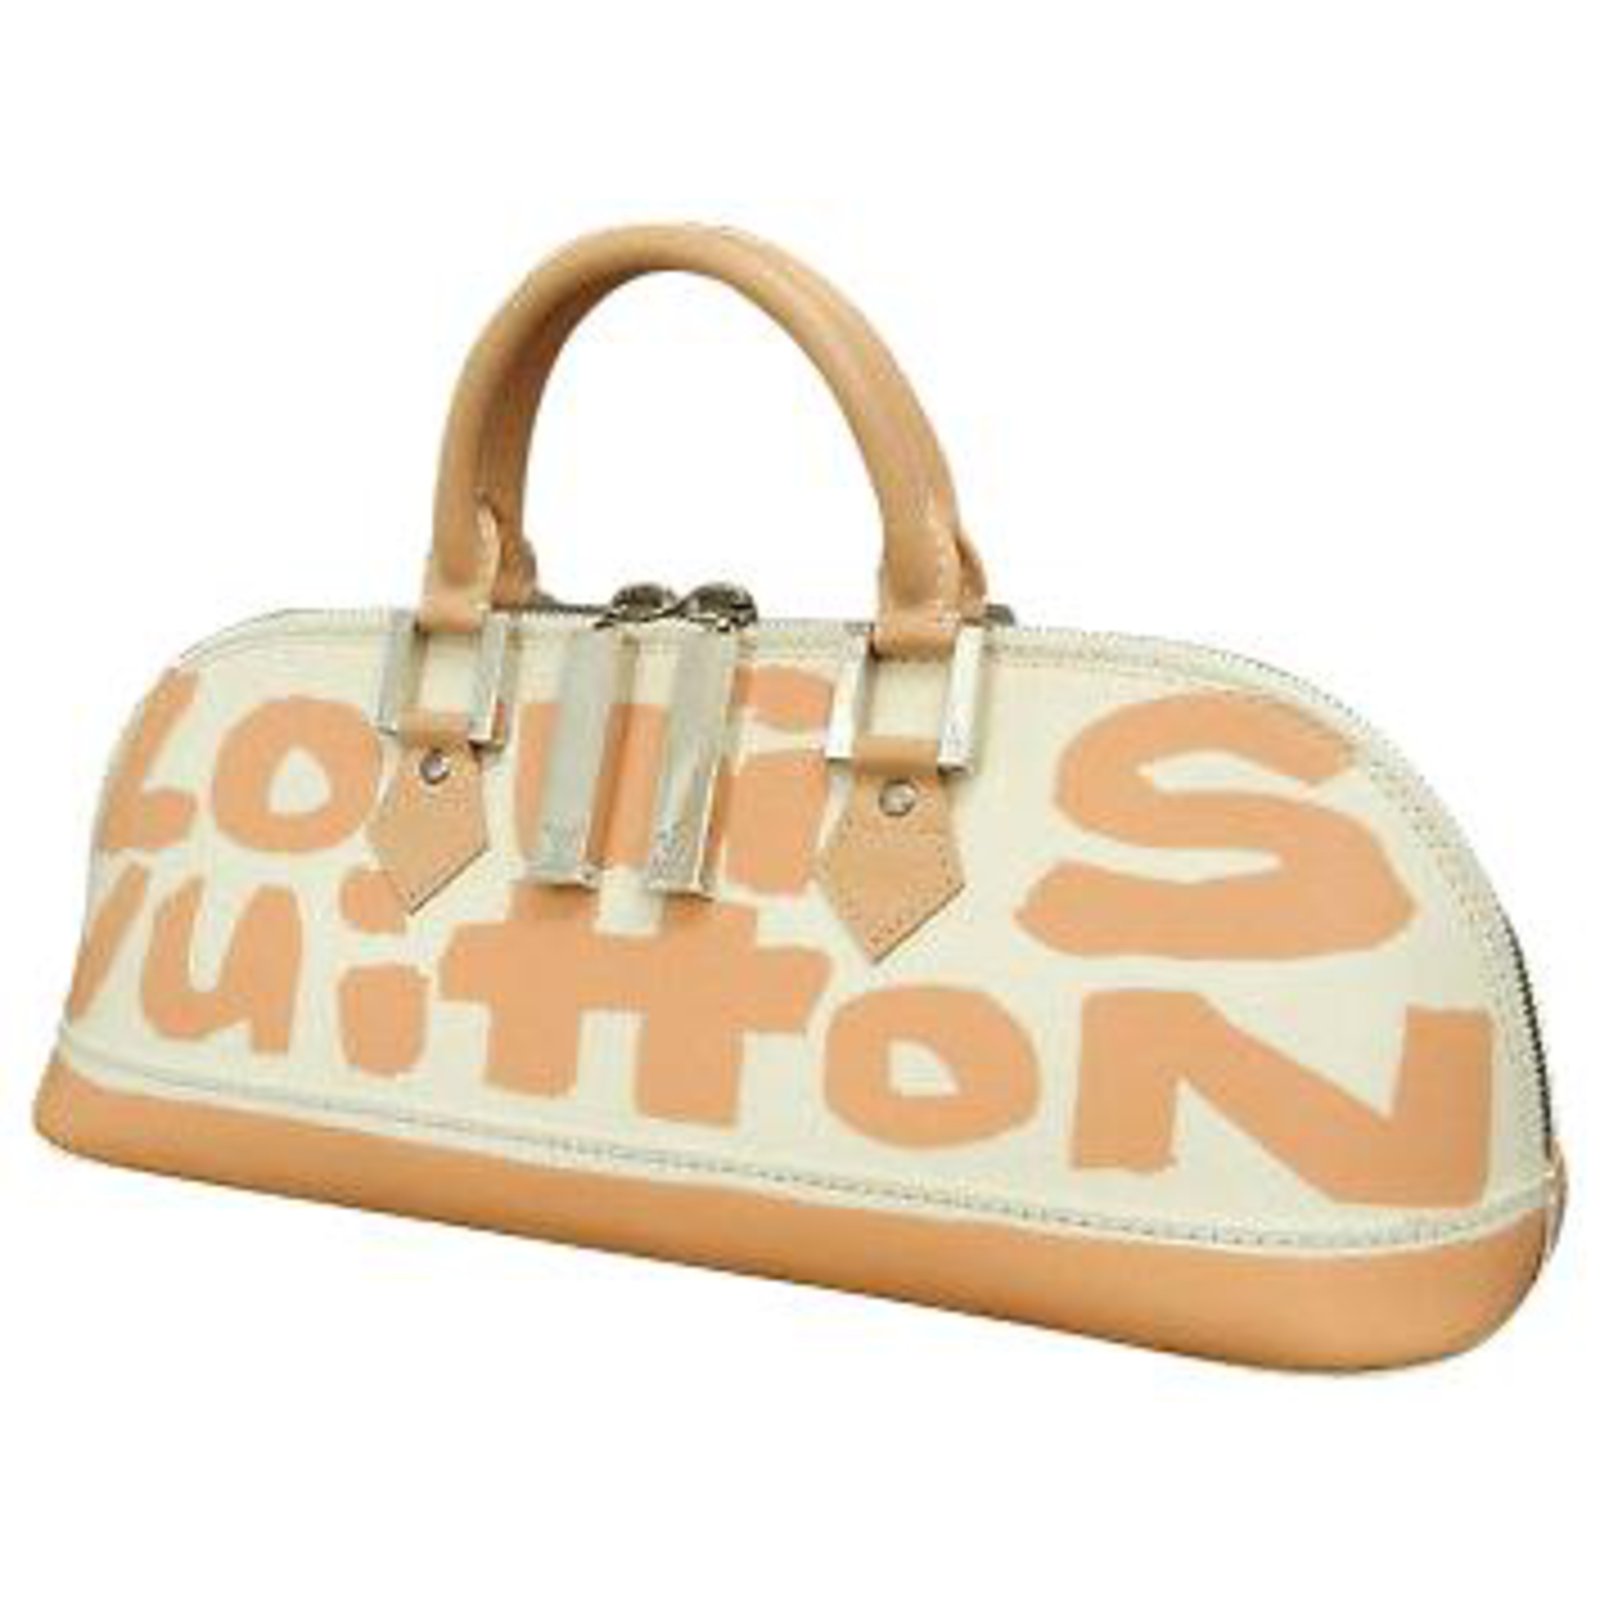 Alma graffiti leather handbag Louis Vuitton White in Leather